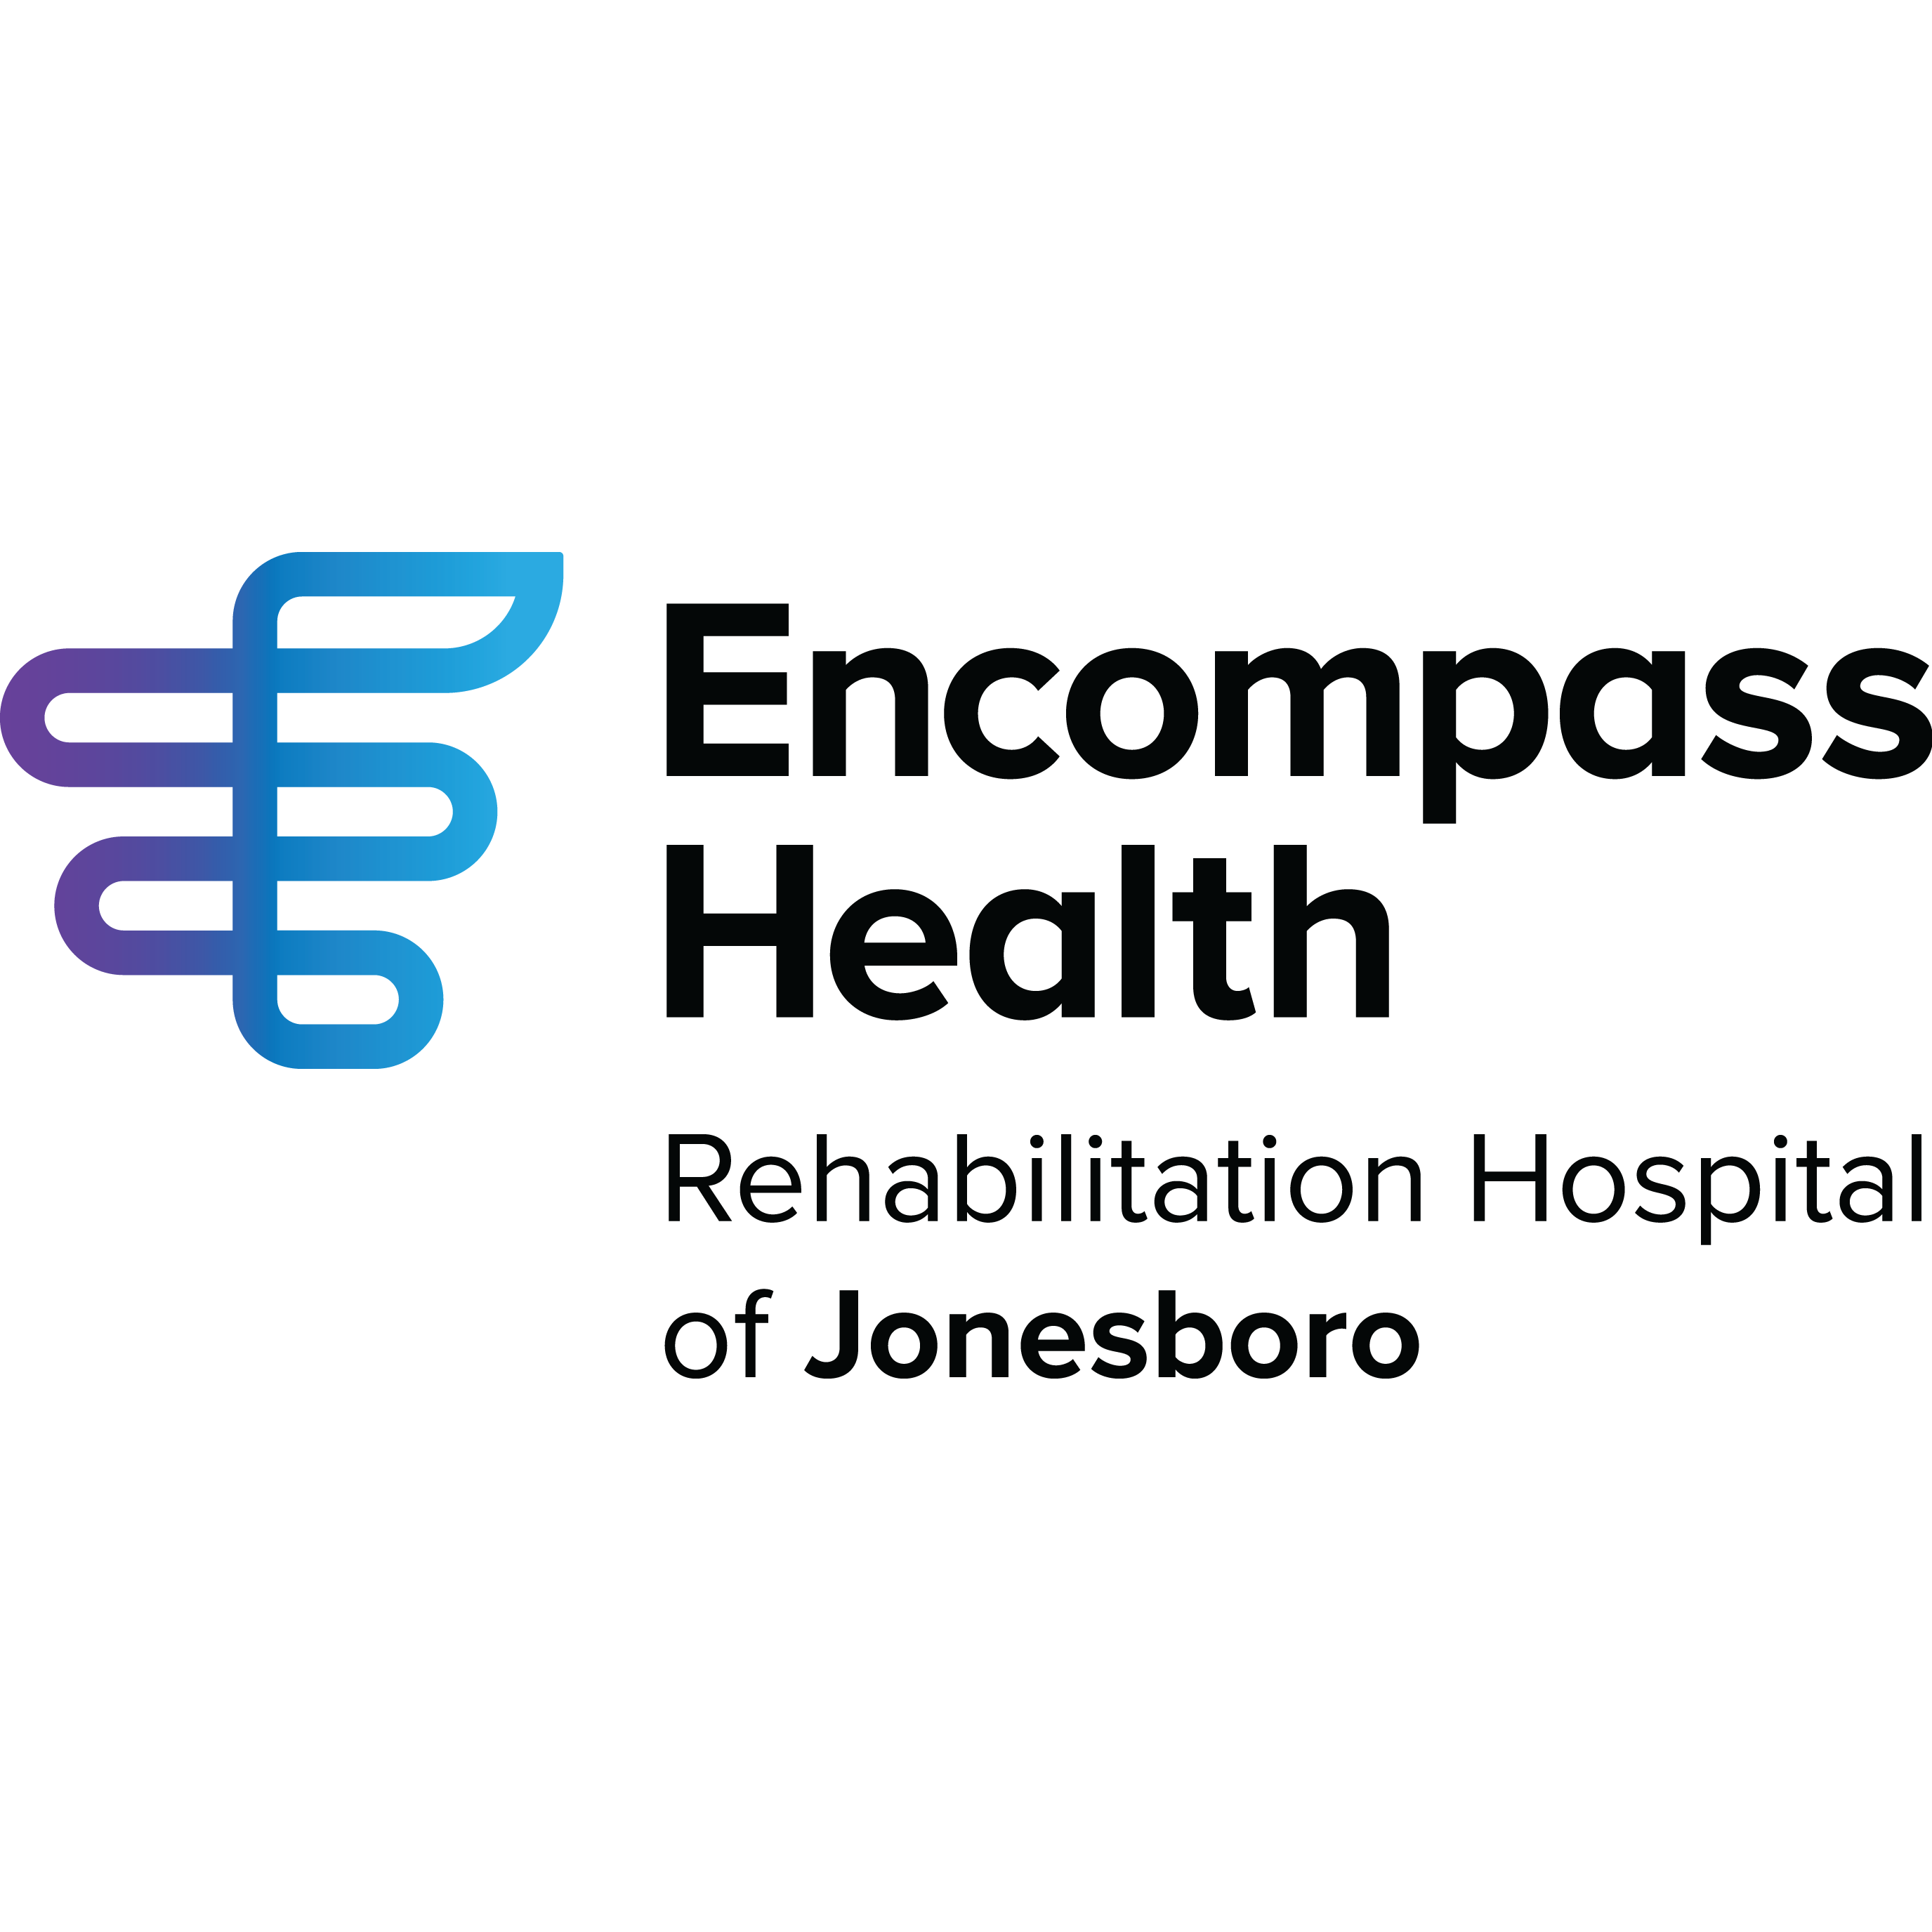 Encompass Health Rehabilitation Hospital of Jonesboro Jonesboro (870)932-0440